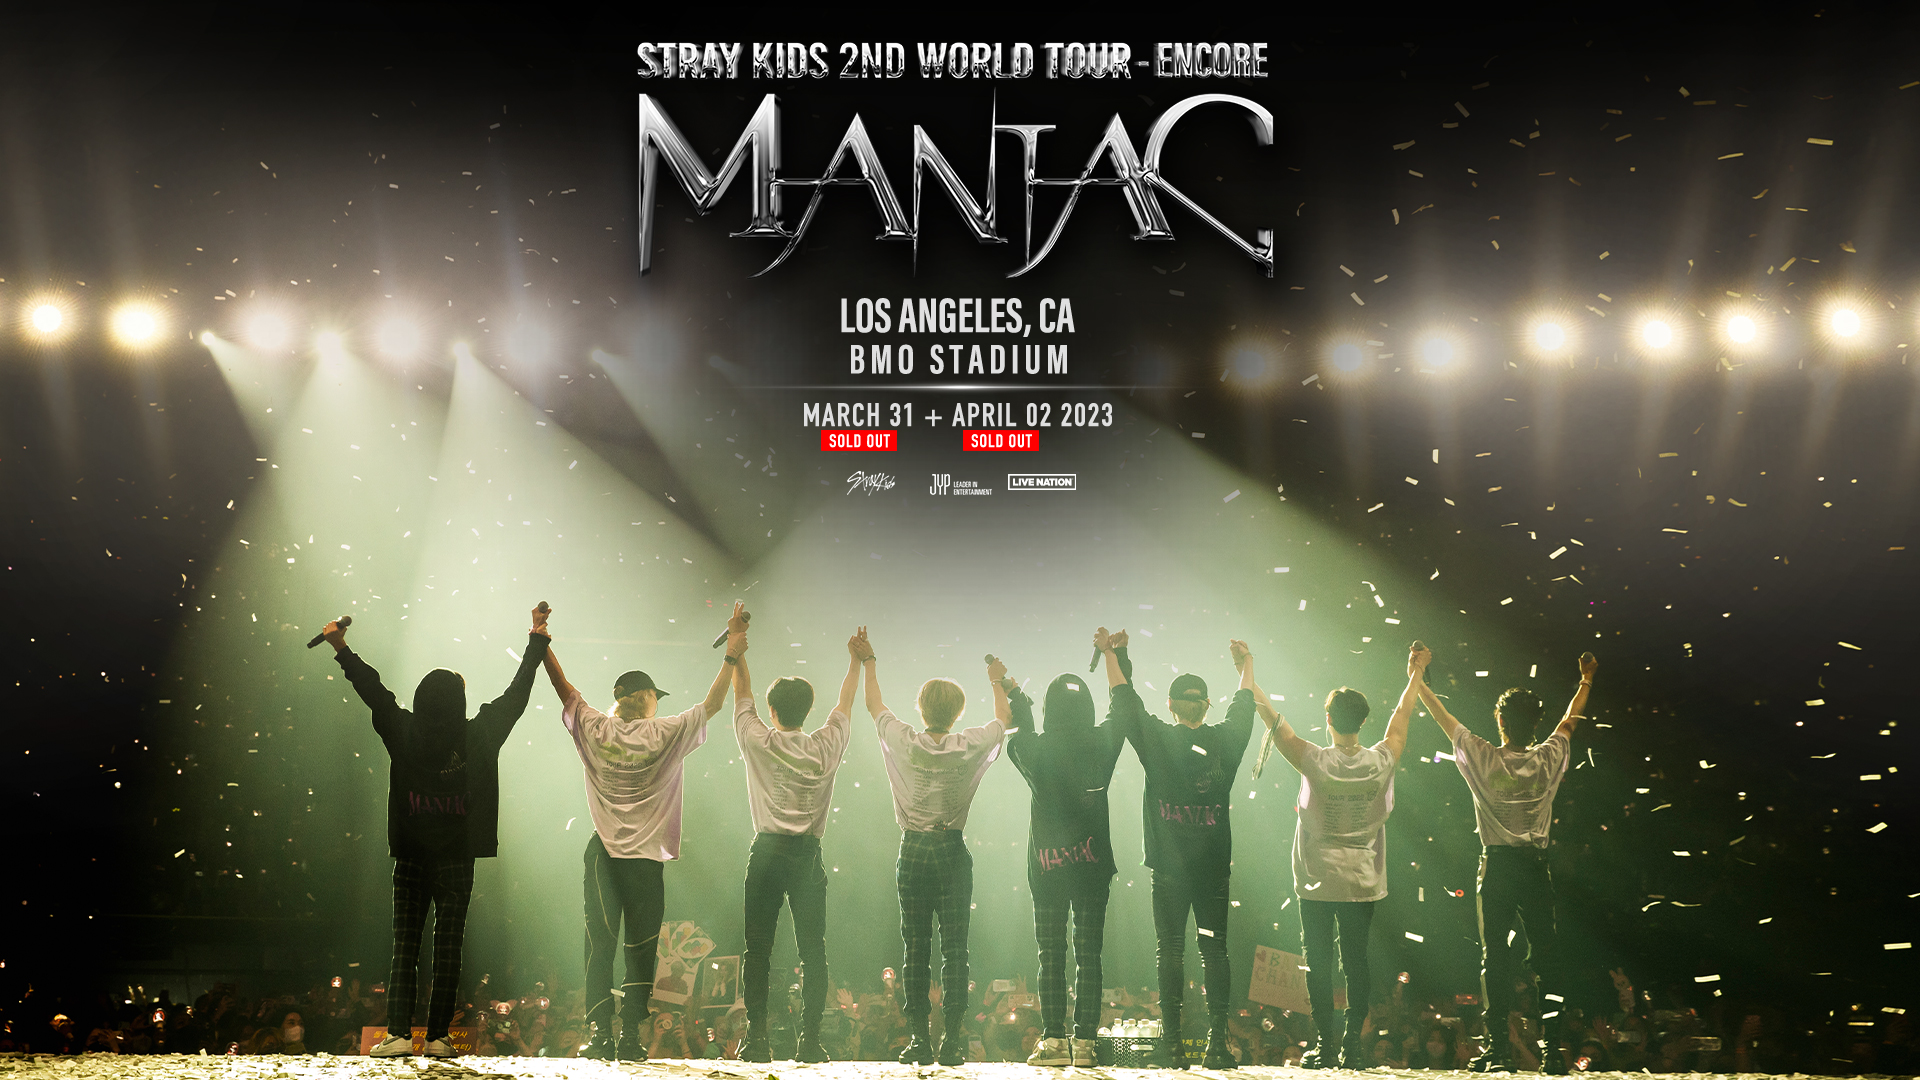 Stray Kids 2nd World Tour “MANIAC” Encore|BMO Stadium